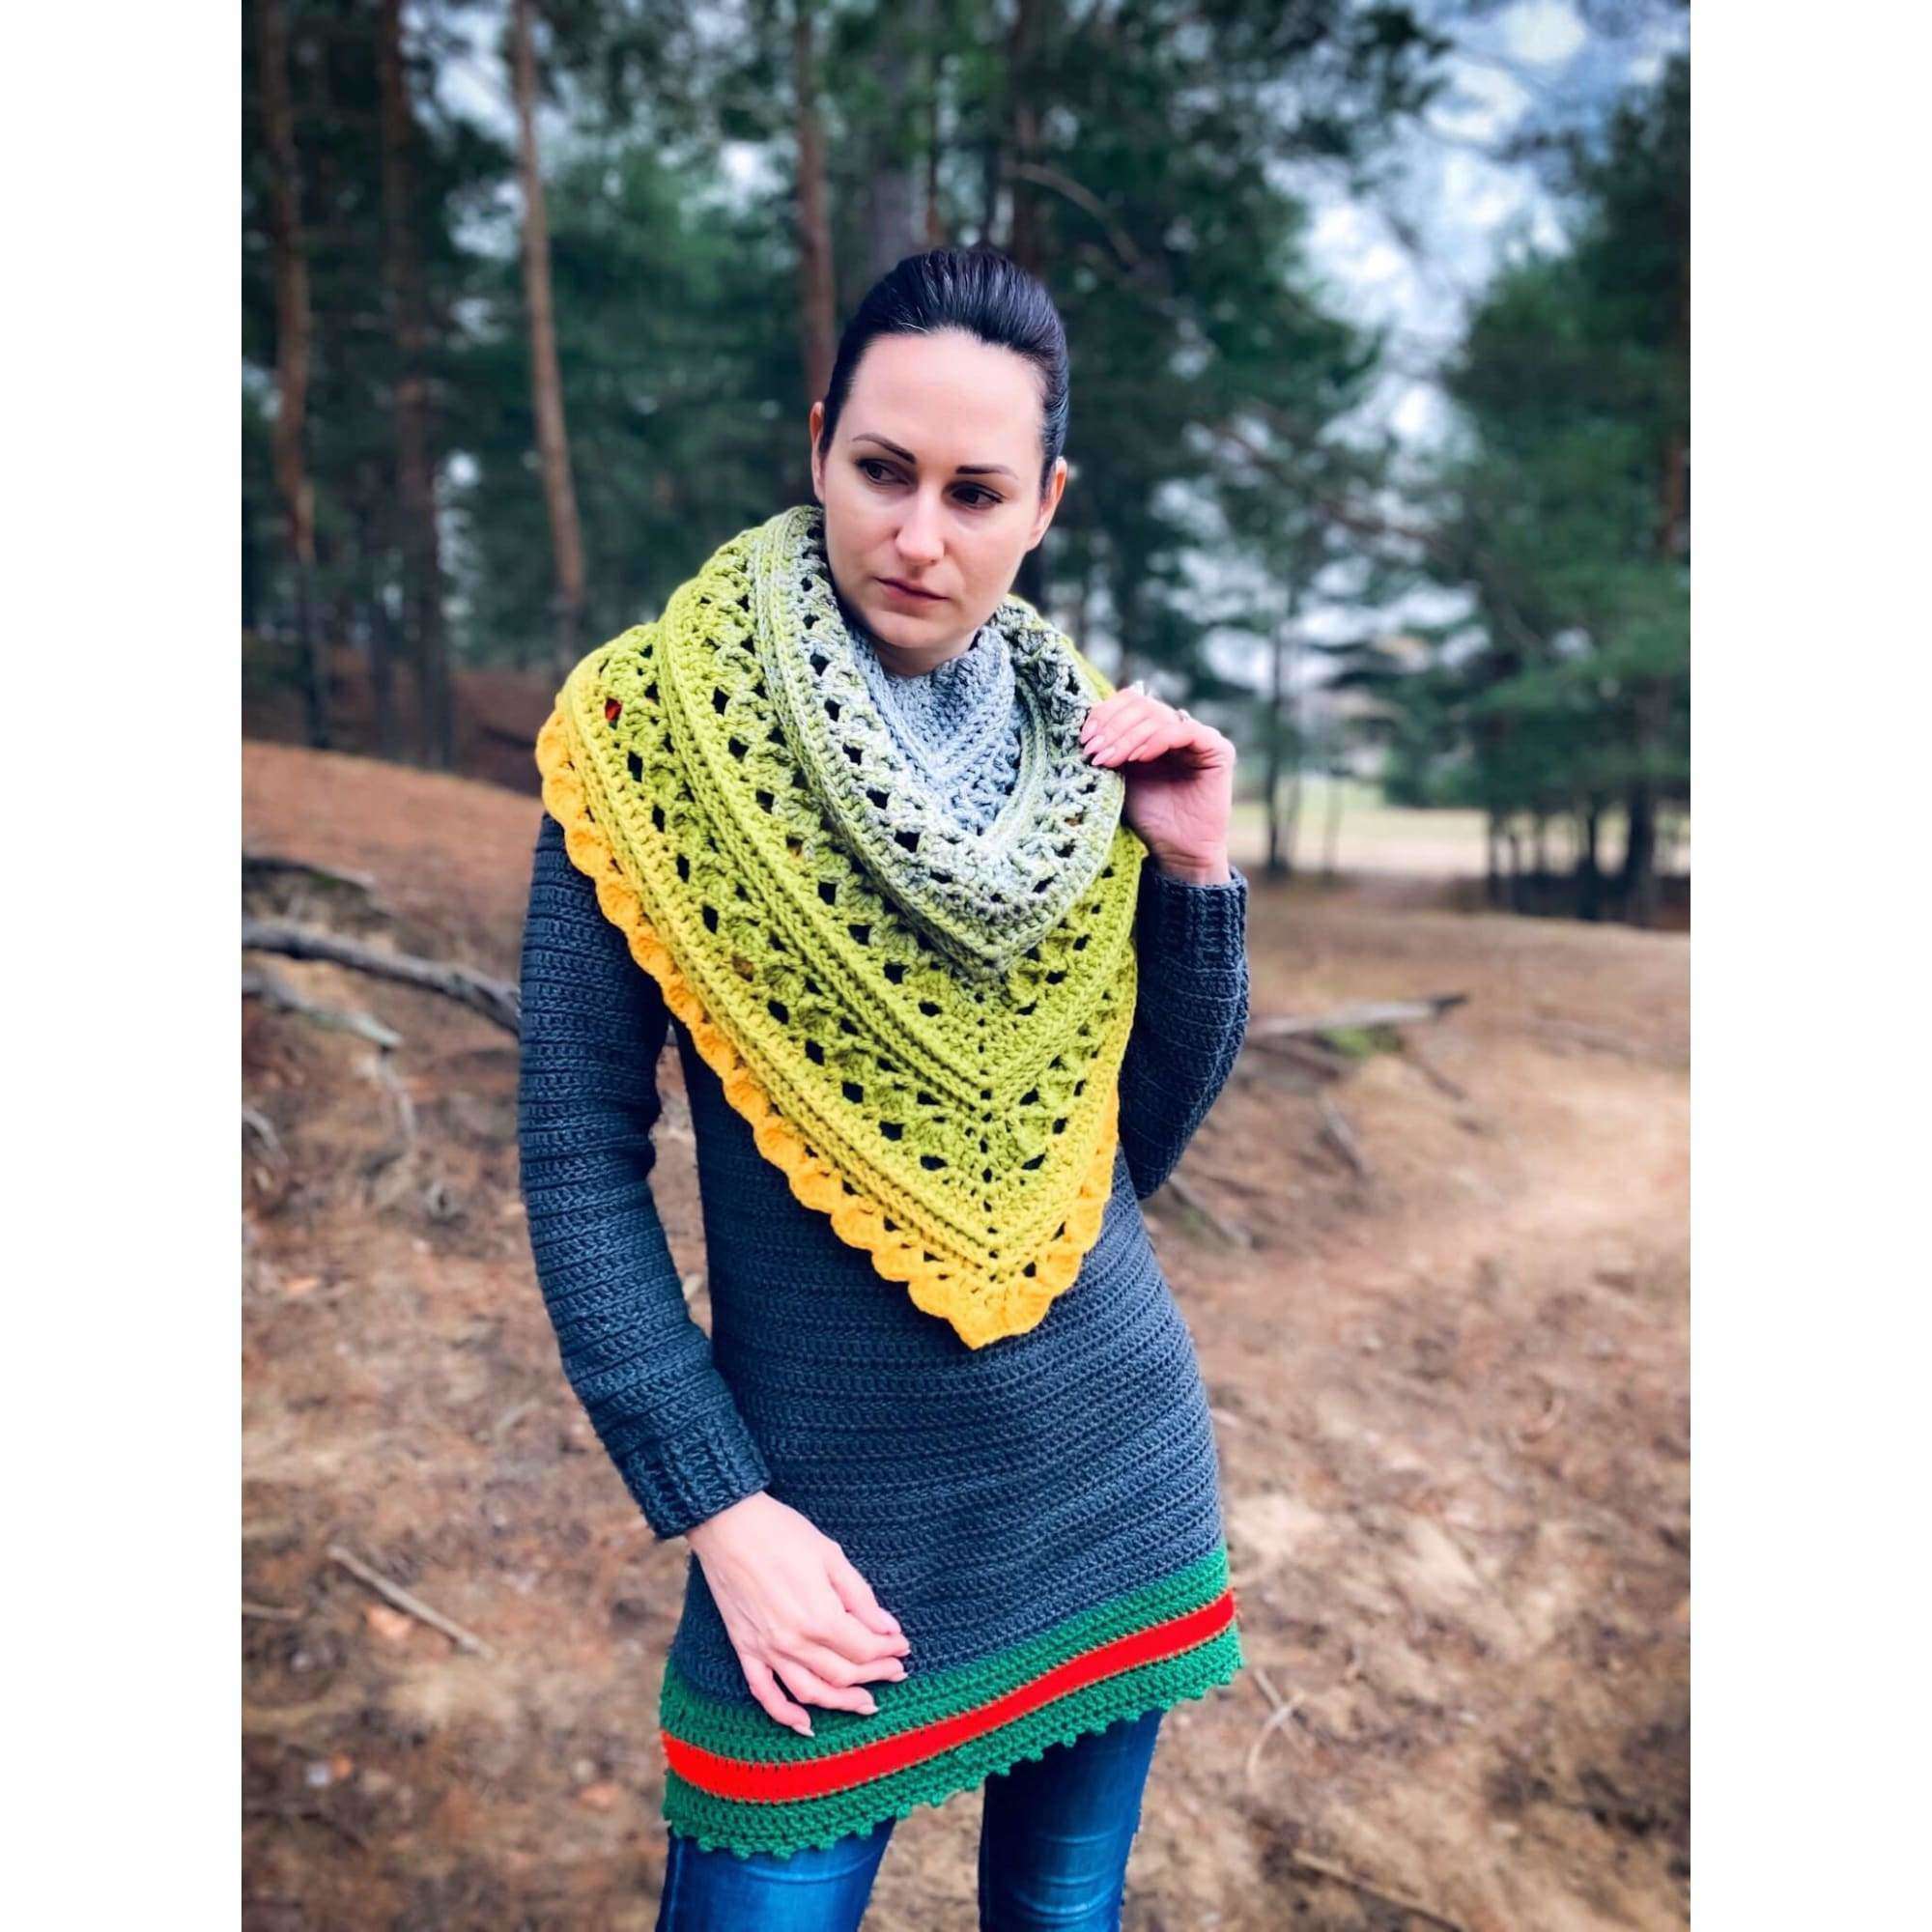 Crochet Pattern - Into The Mystic Shawl